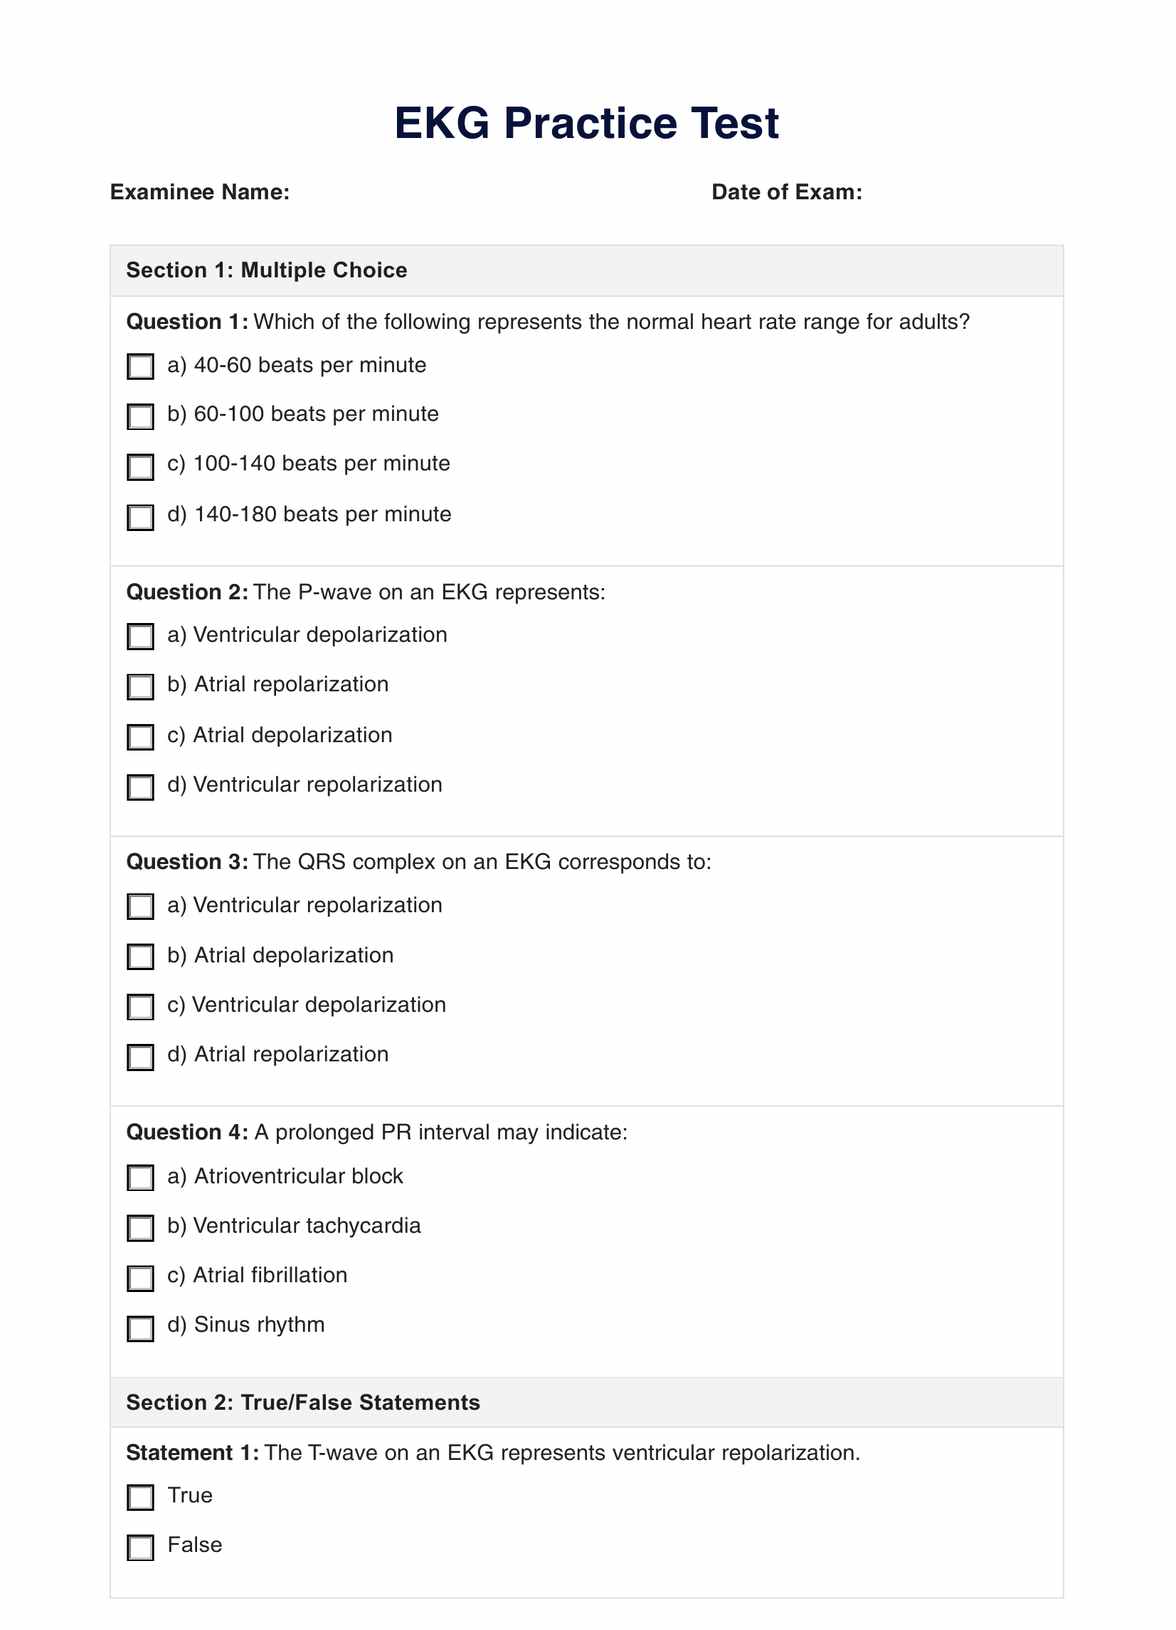 EKG Practice Test PDF Example